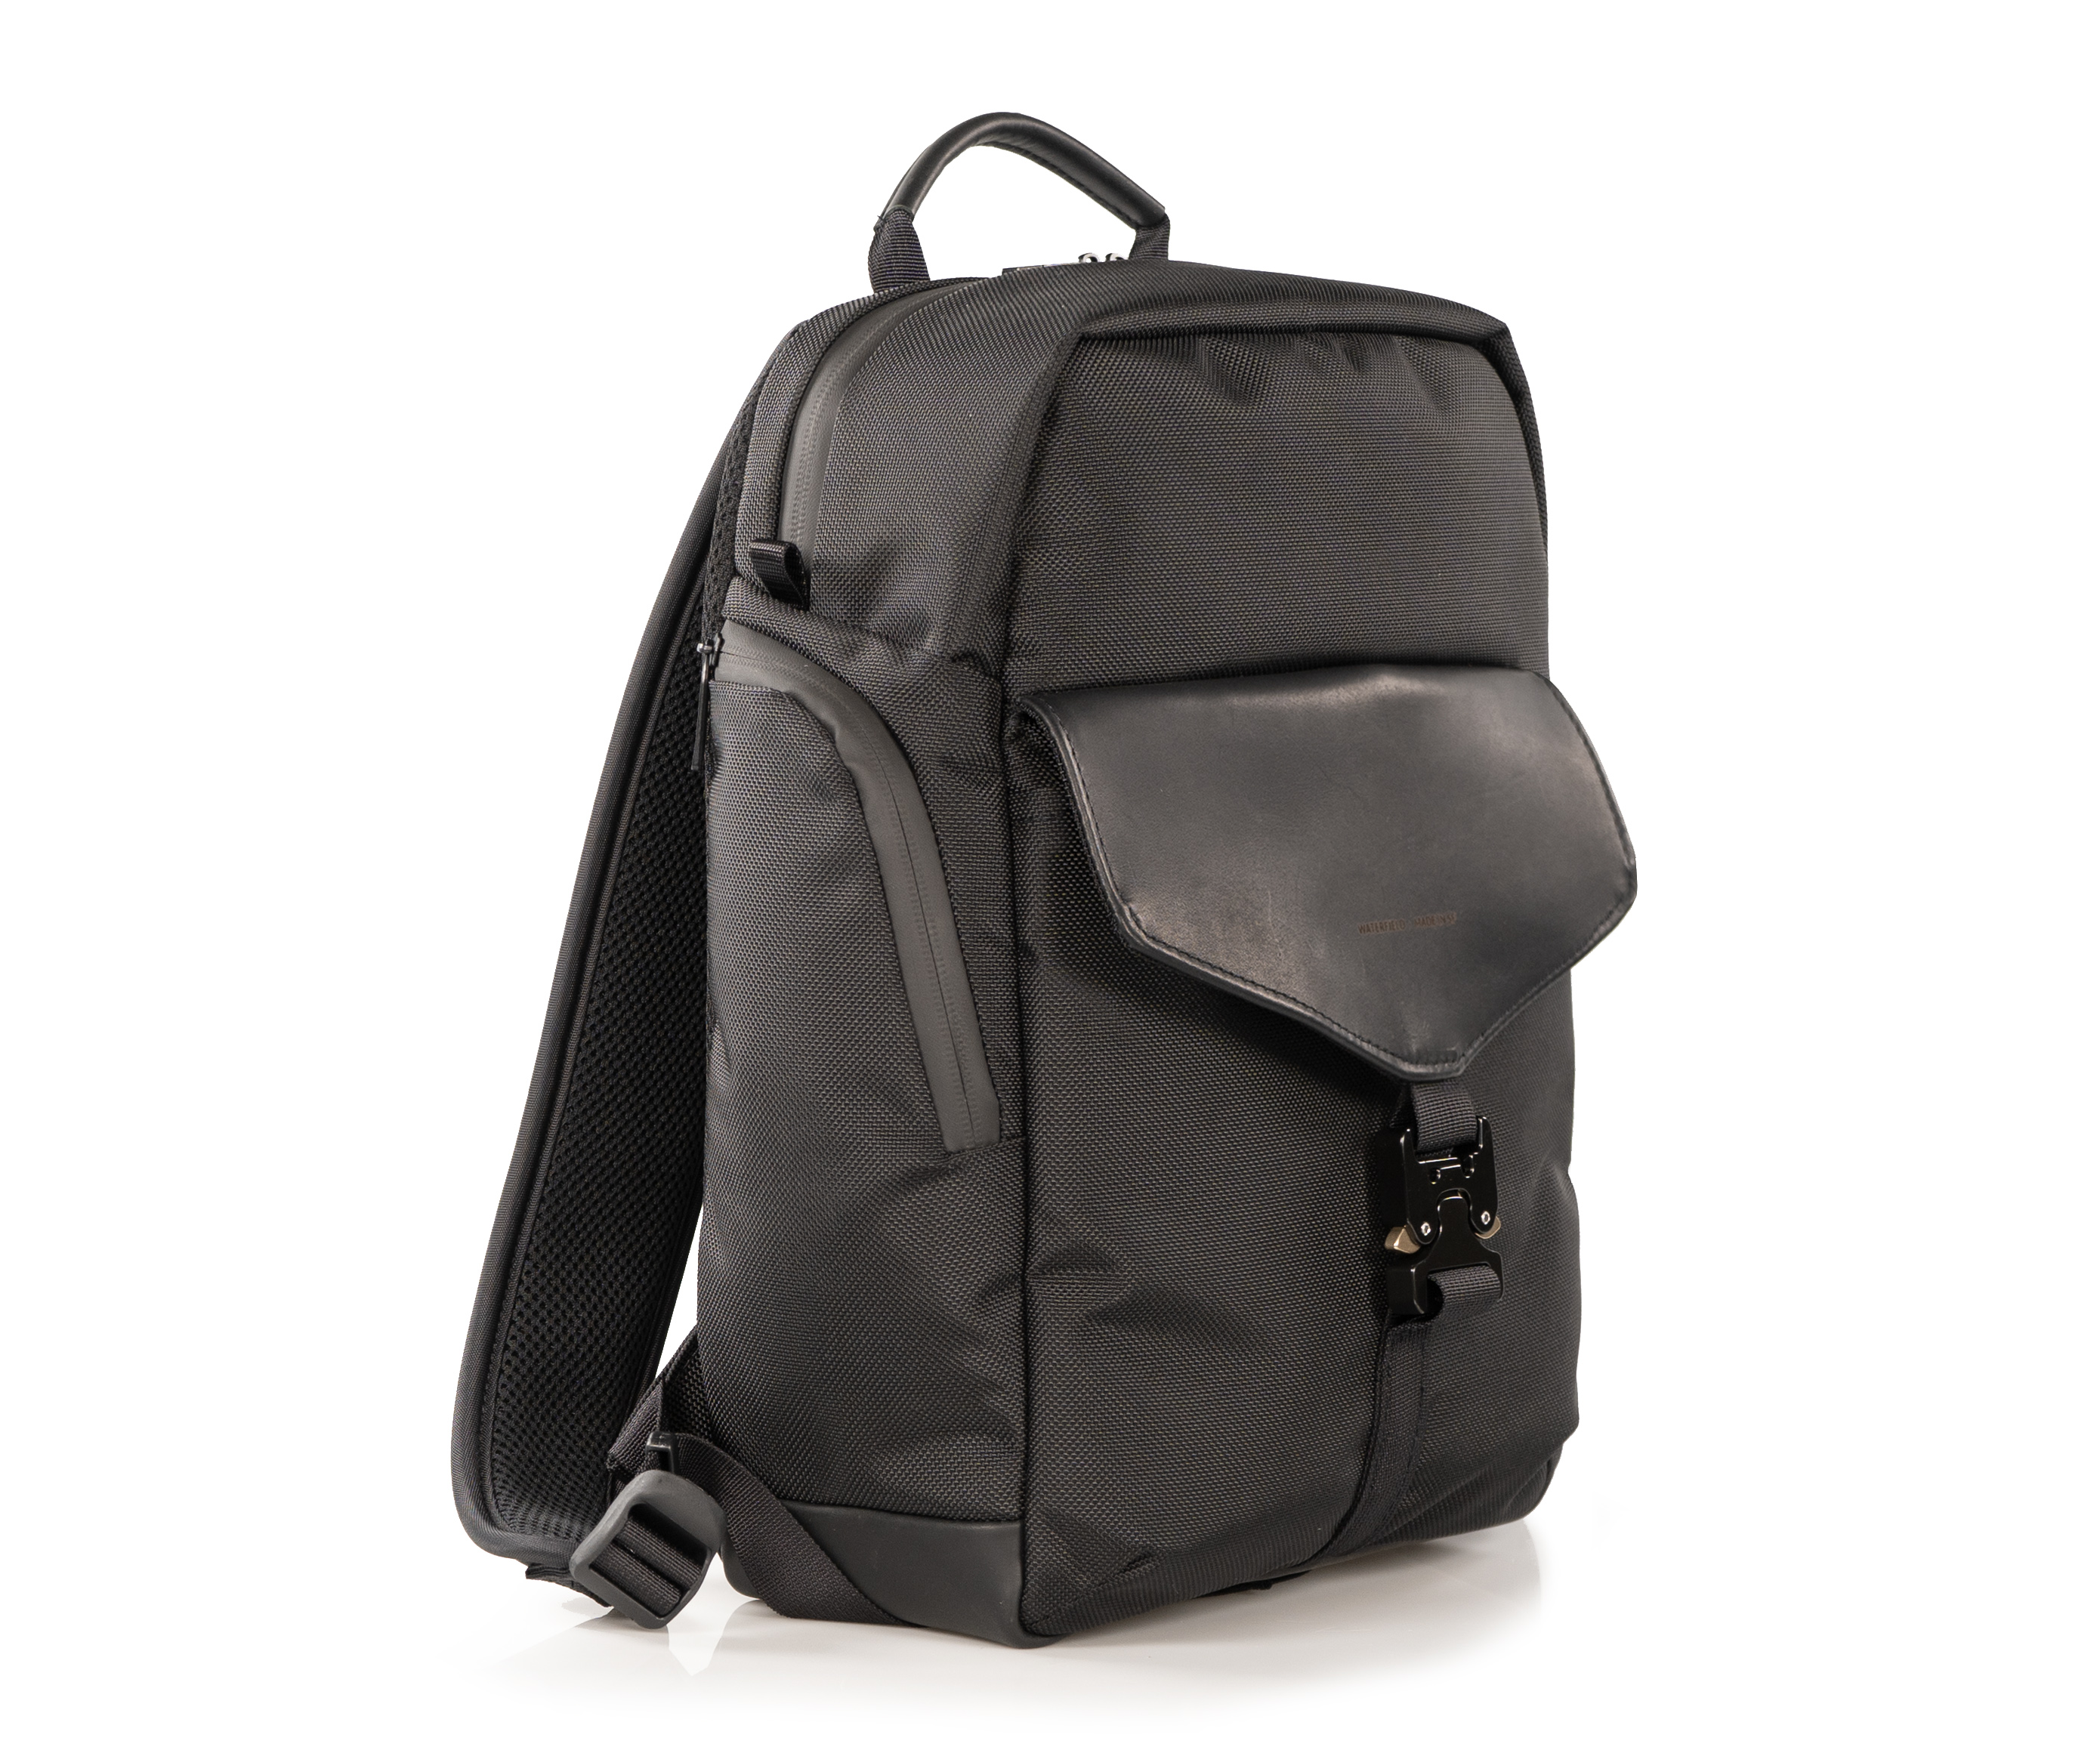 Field Backpack in ballistic nylon and full-grain leather